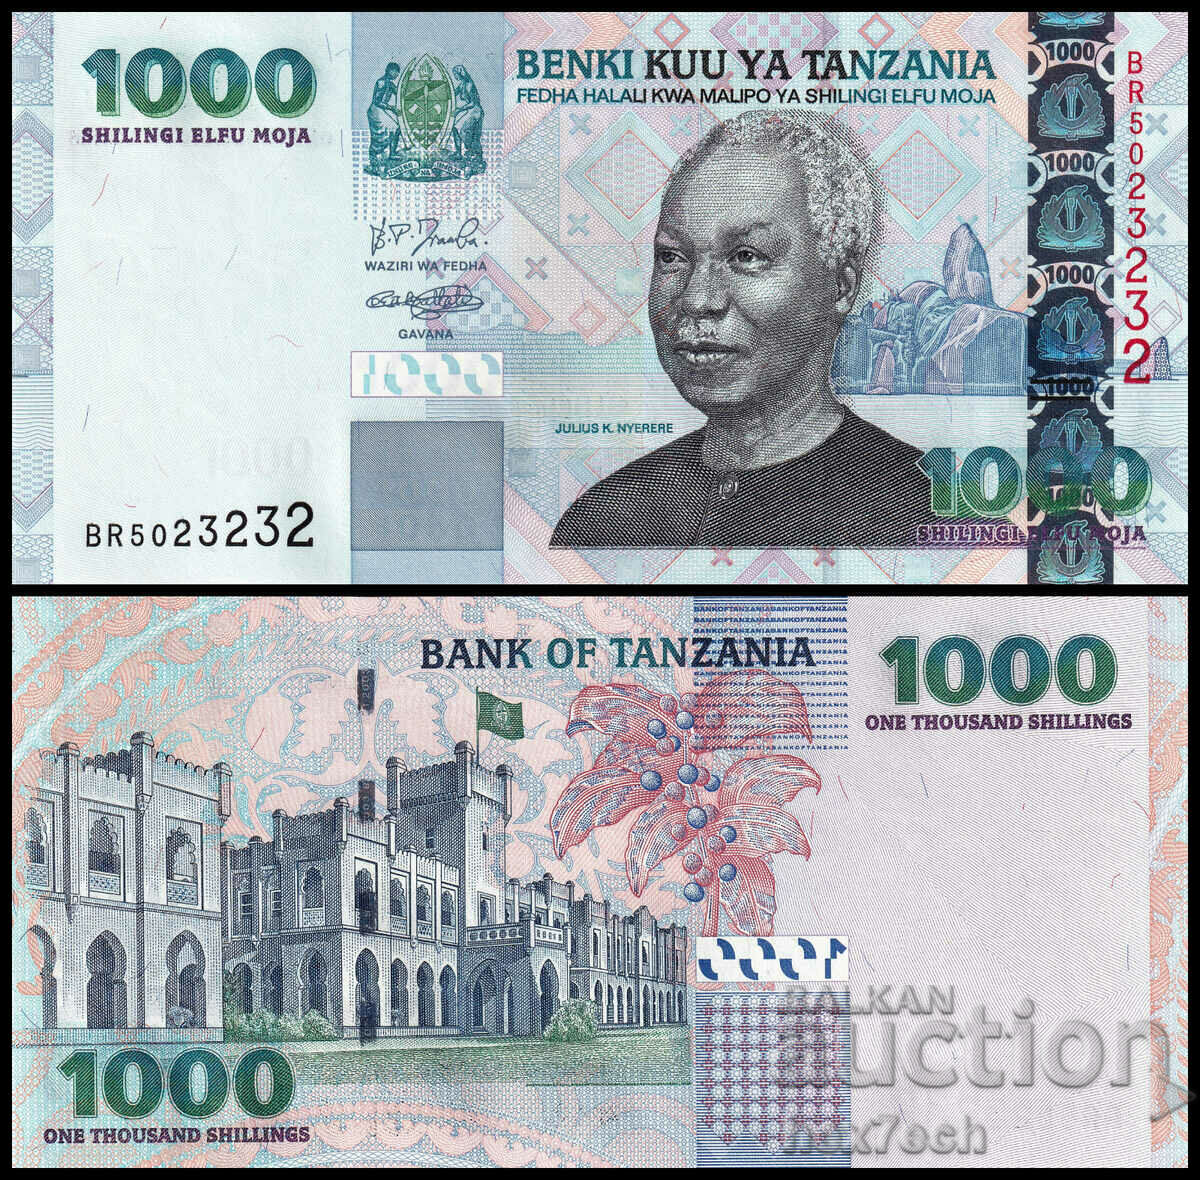 ❤️ ⭐ Τανζανία 2003-2006 1000 σελίνια UNC Νέο ⭐ ❤️